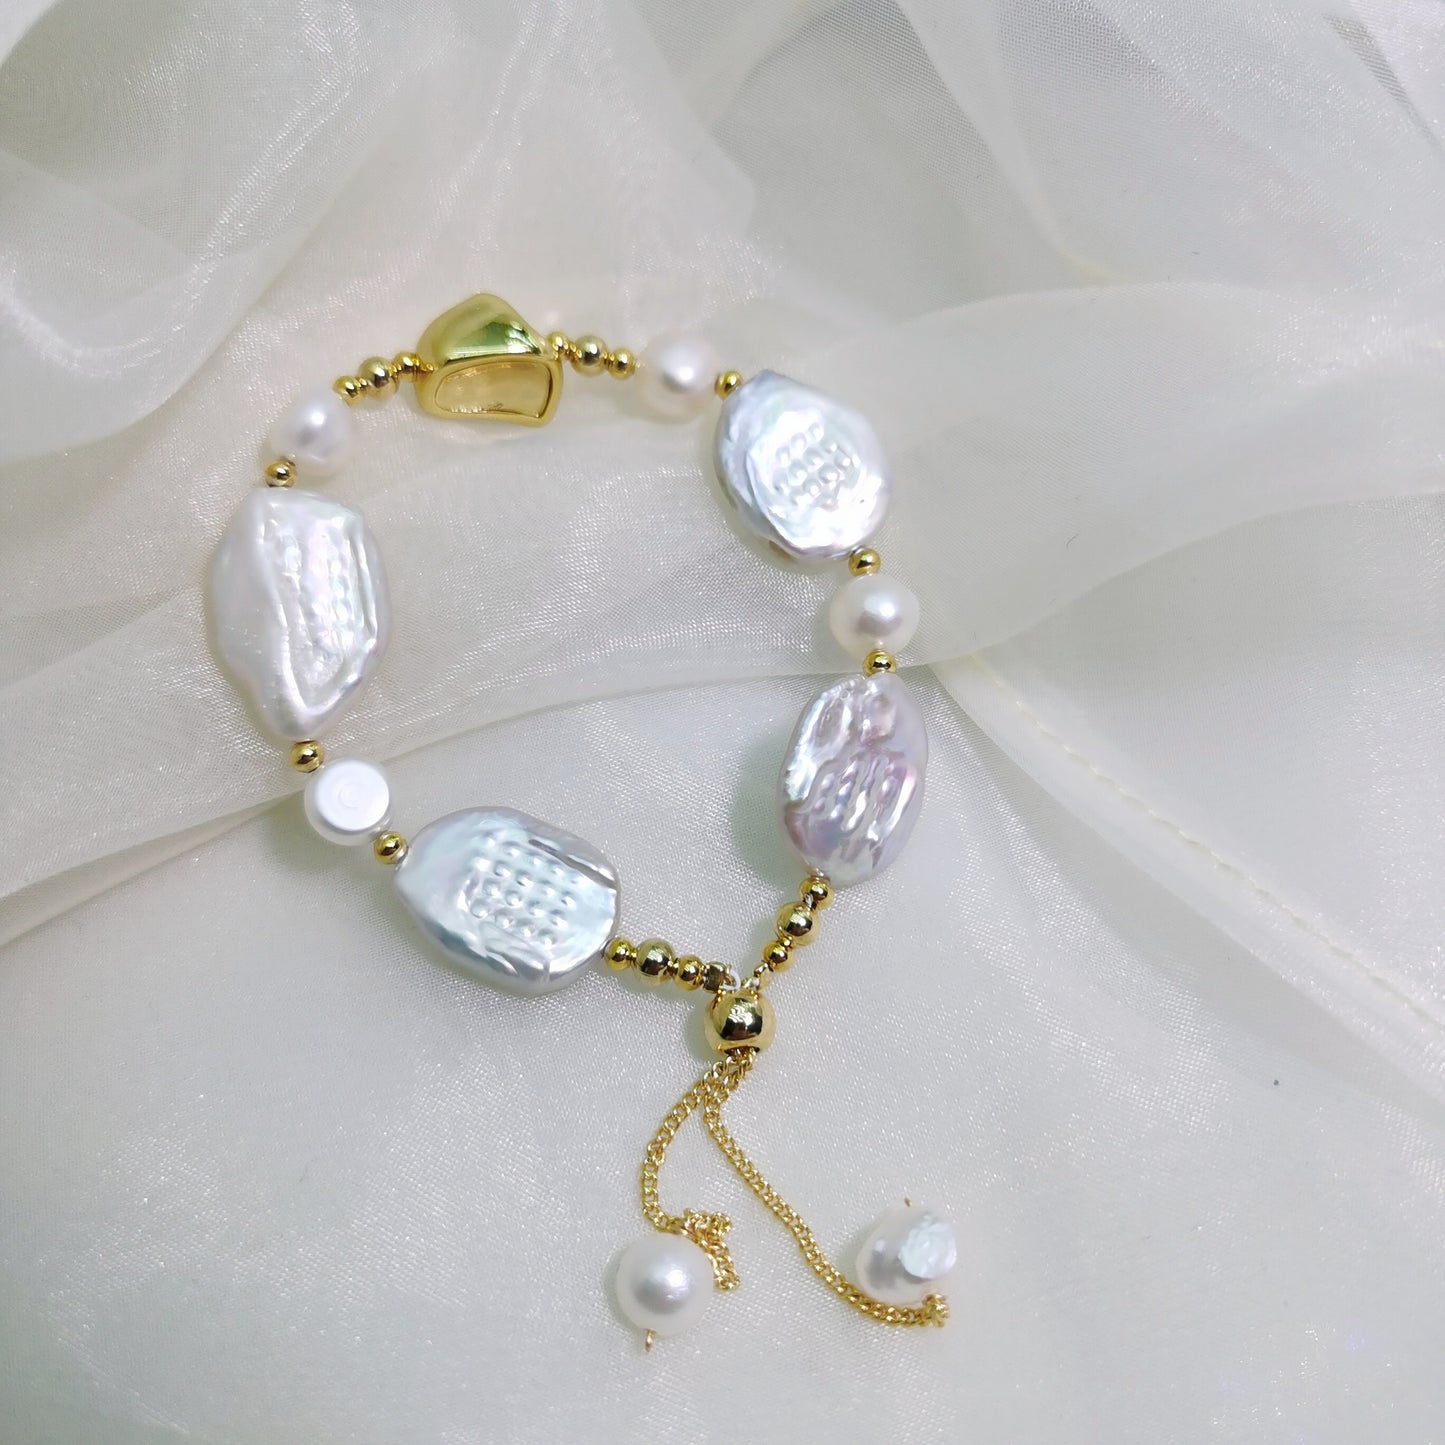 A012 Fashionable Baroque Pearl Bracelet